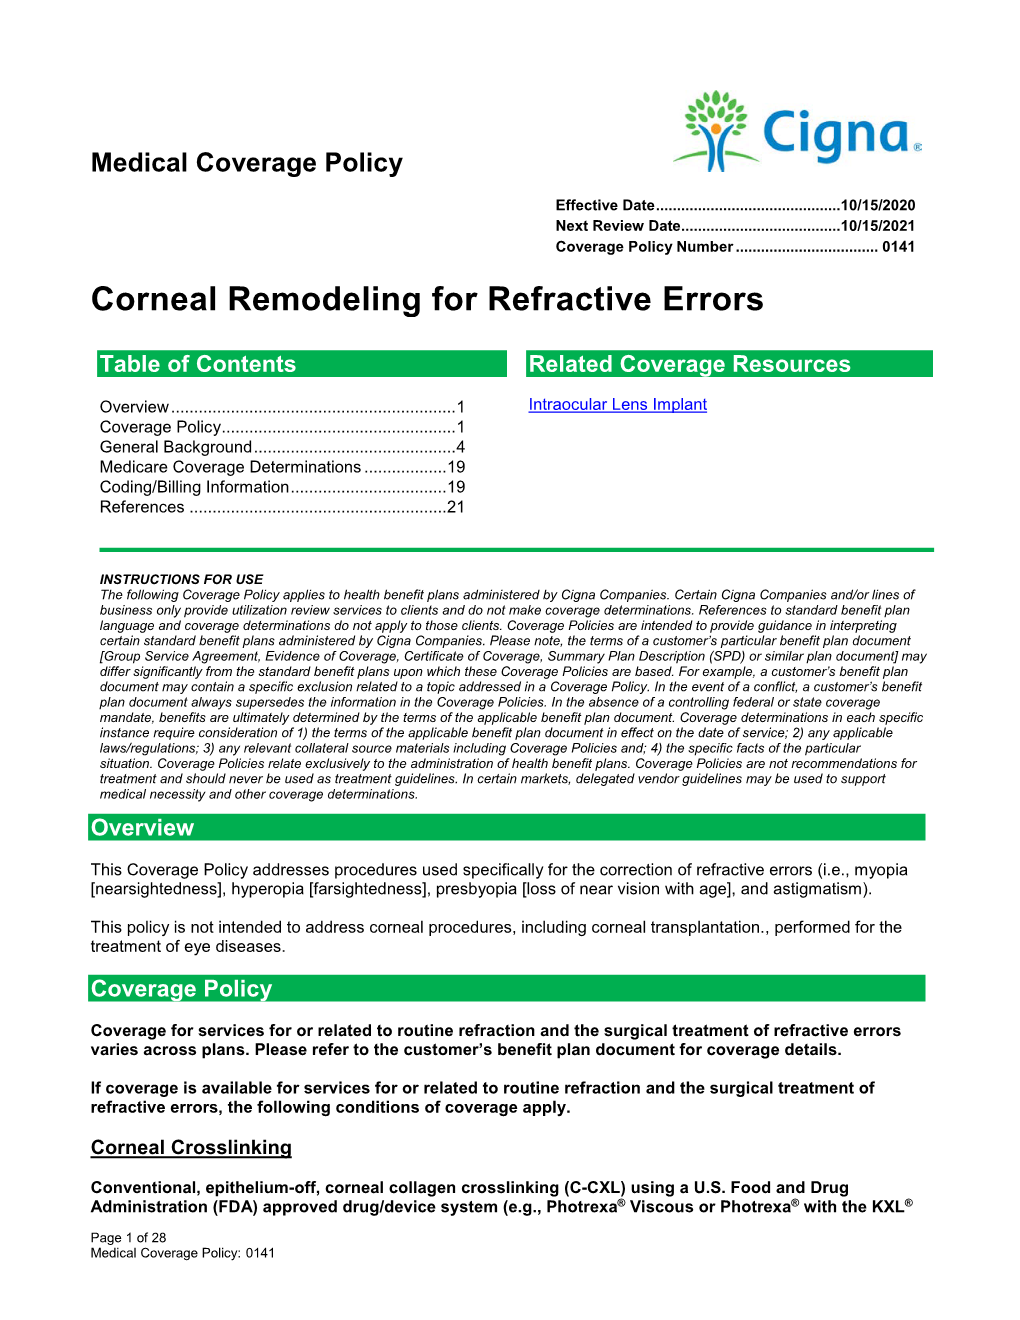 Corneal Remodeling for Refractive Errors – (0141)